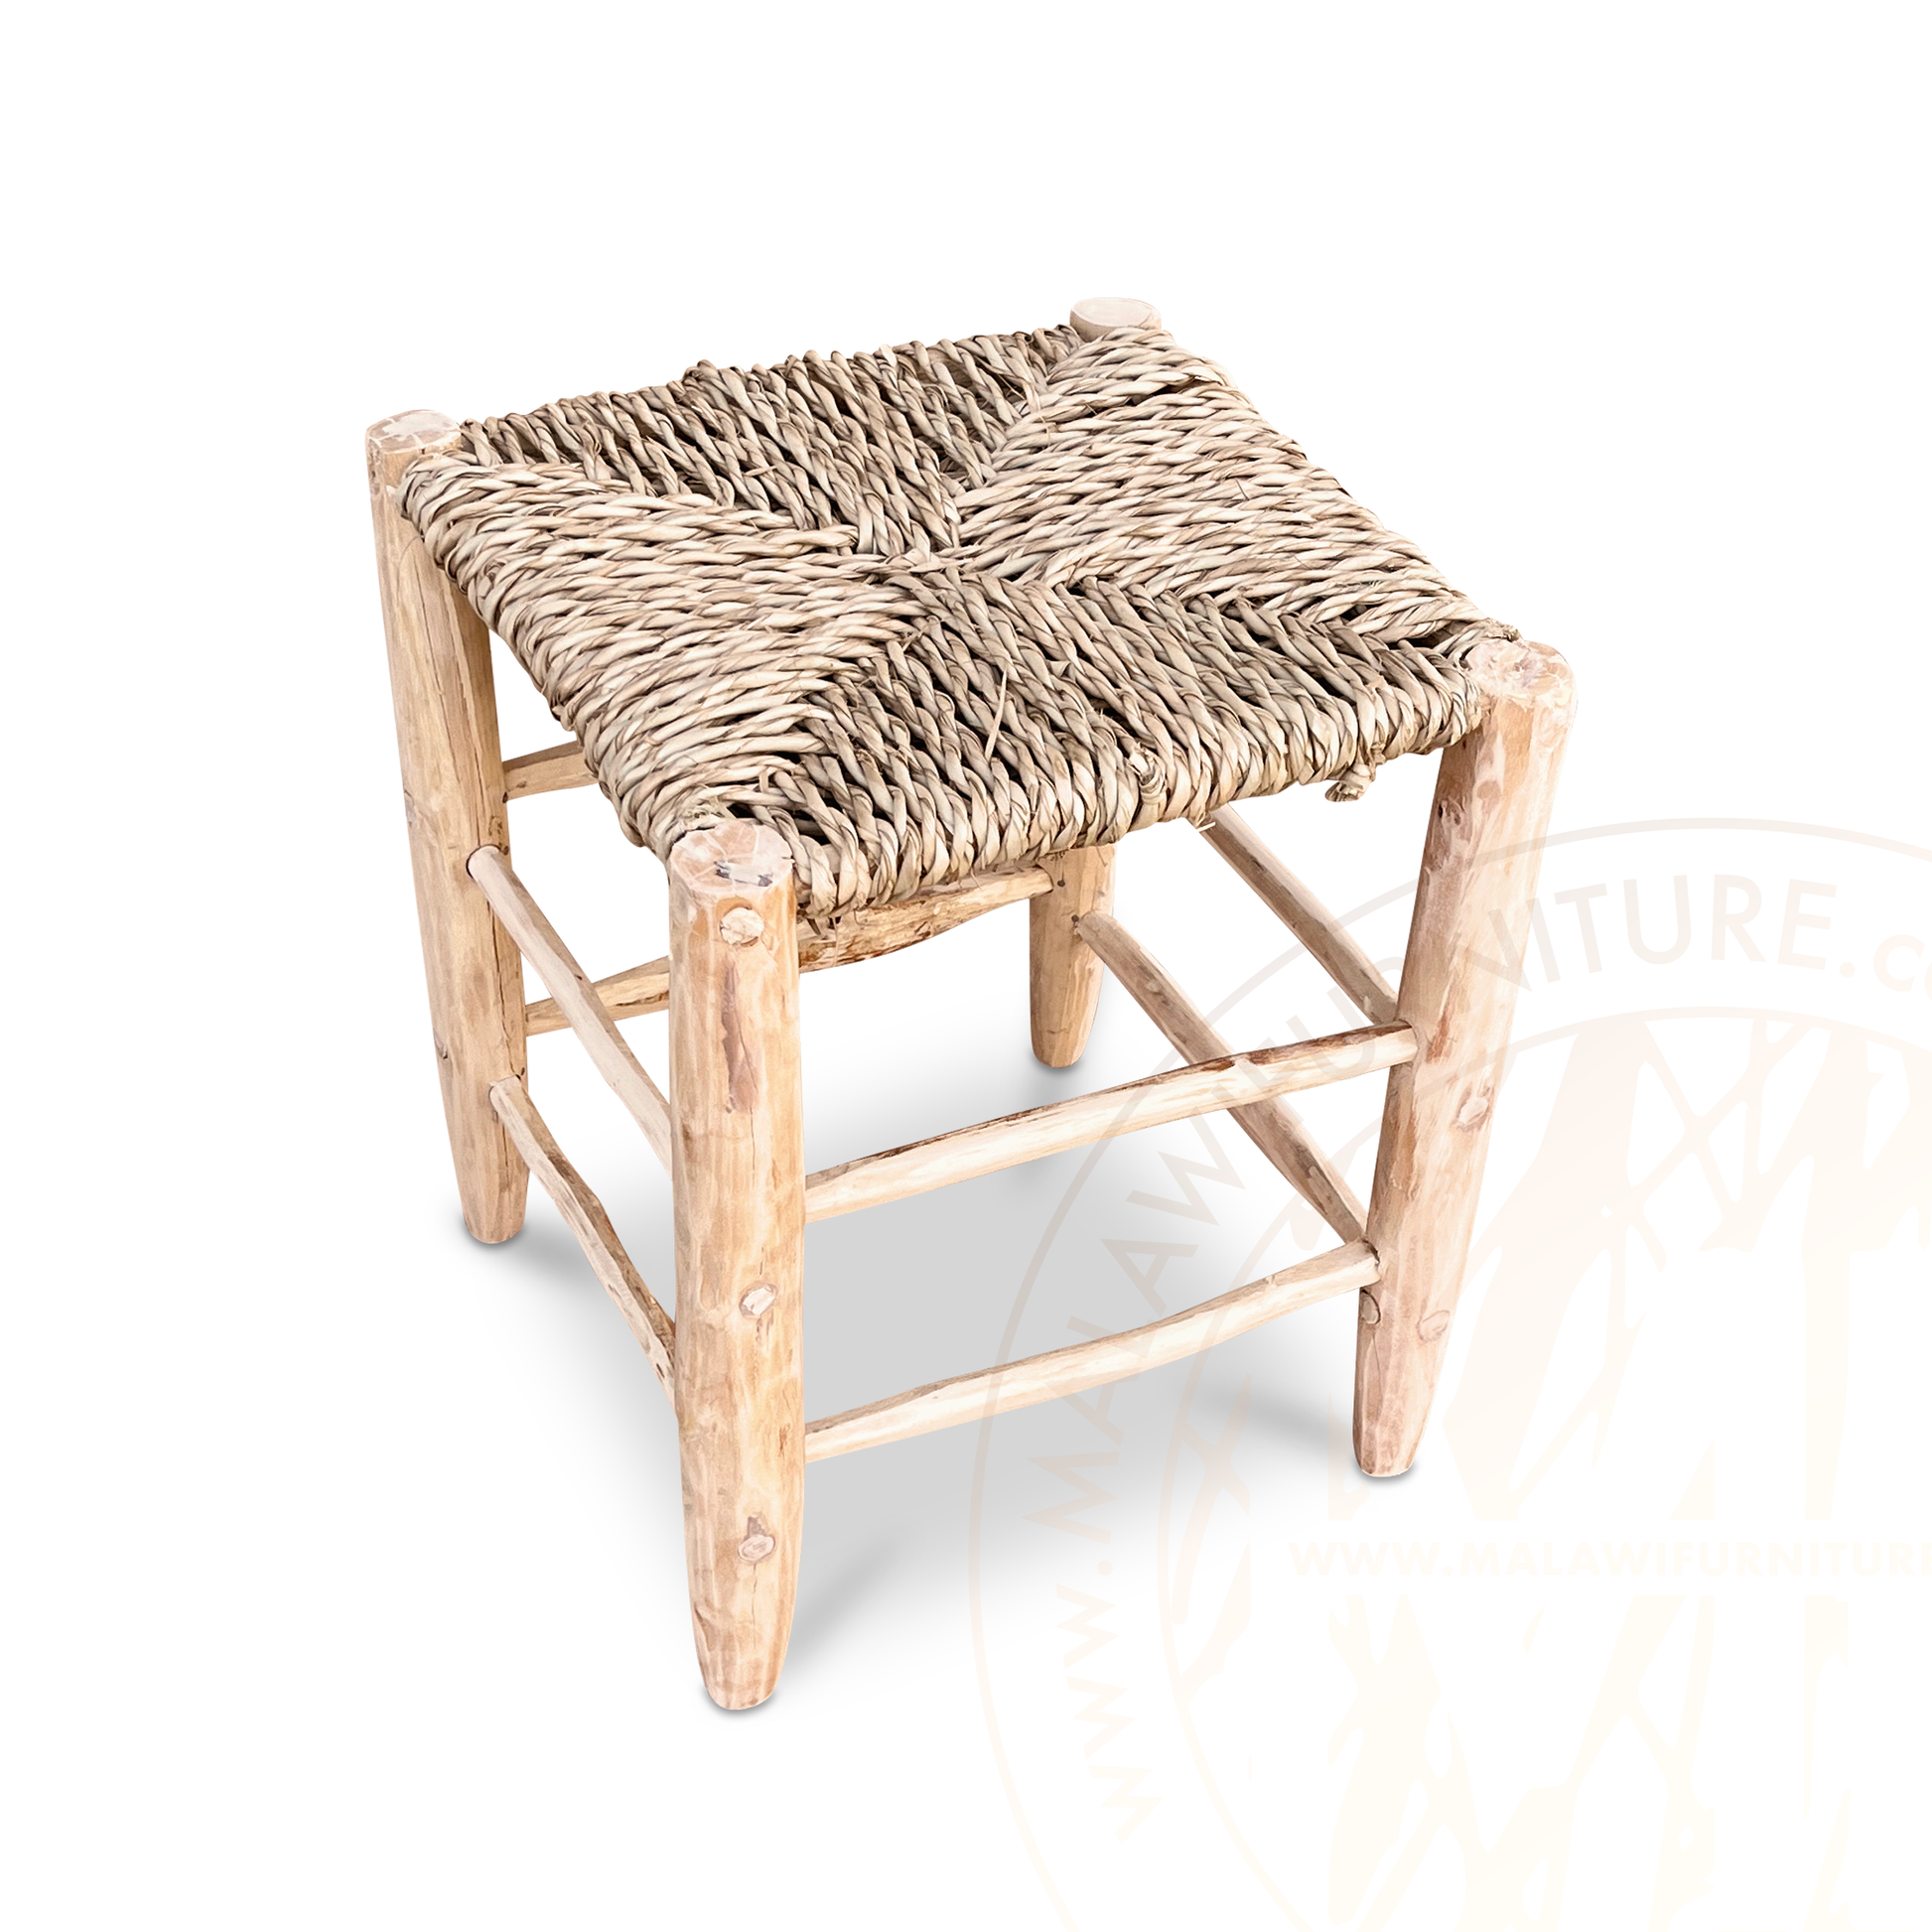 Malawi Half Stool Bench Chair